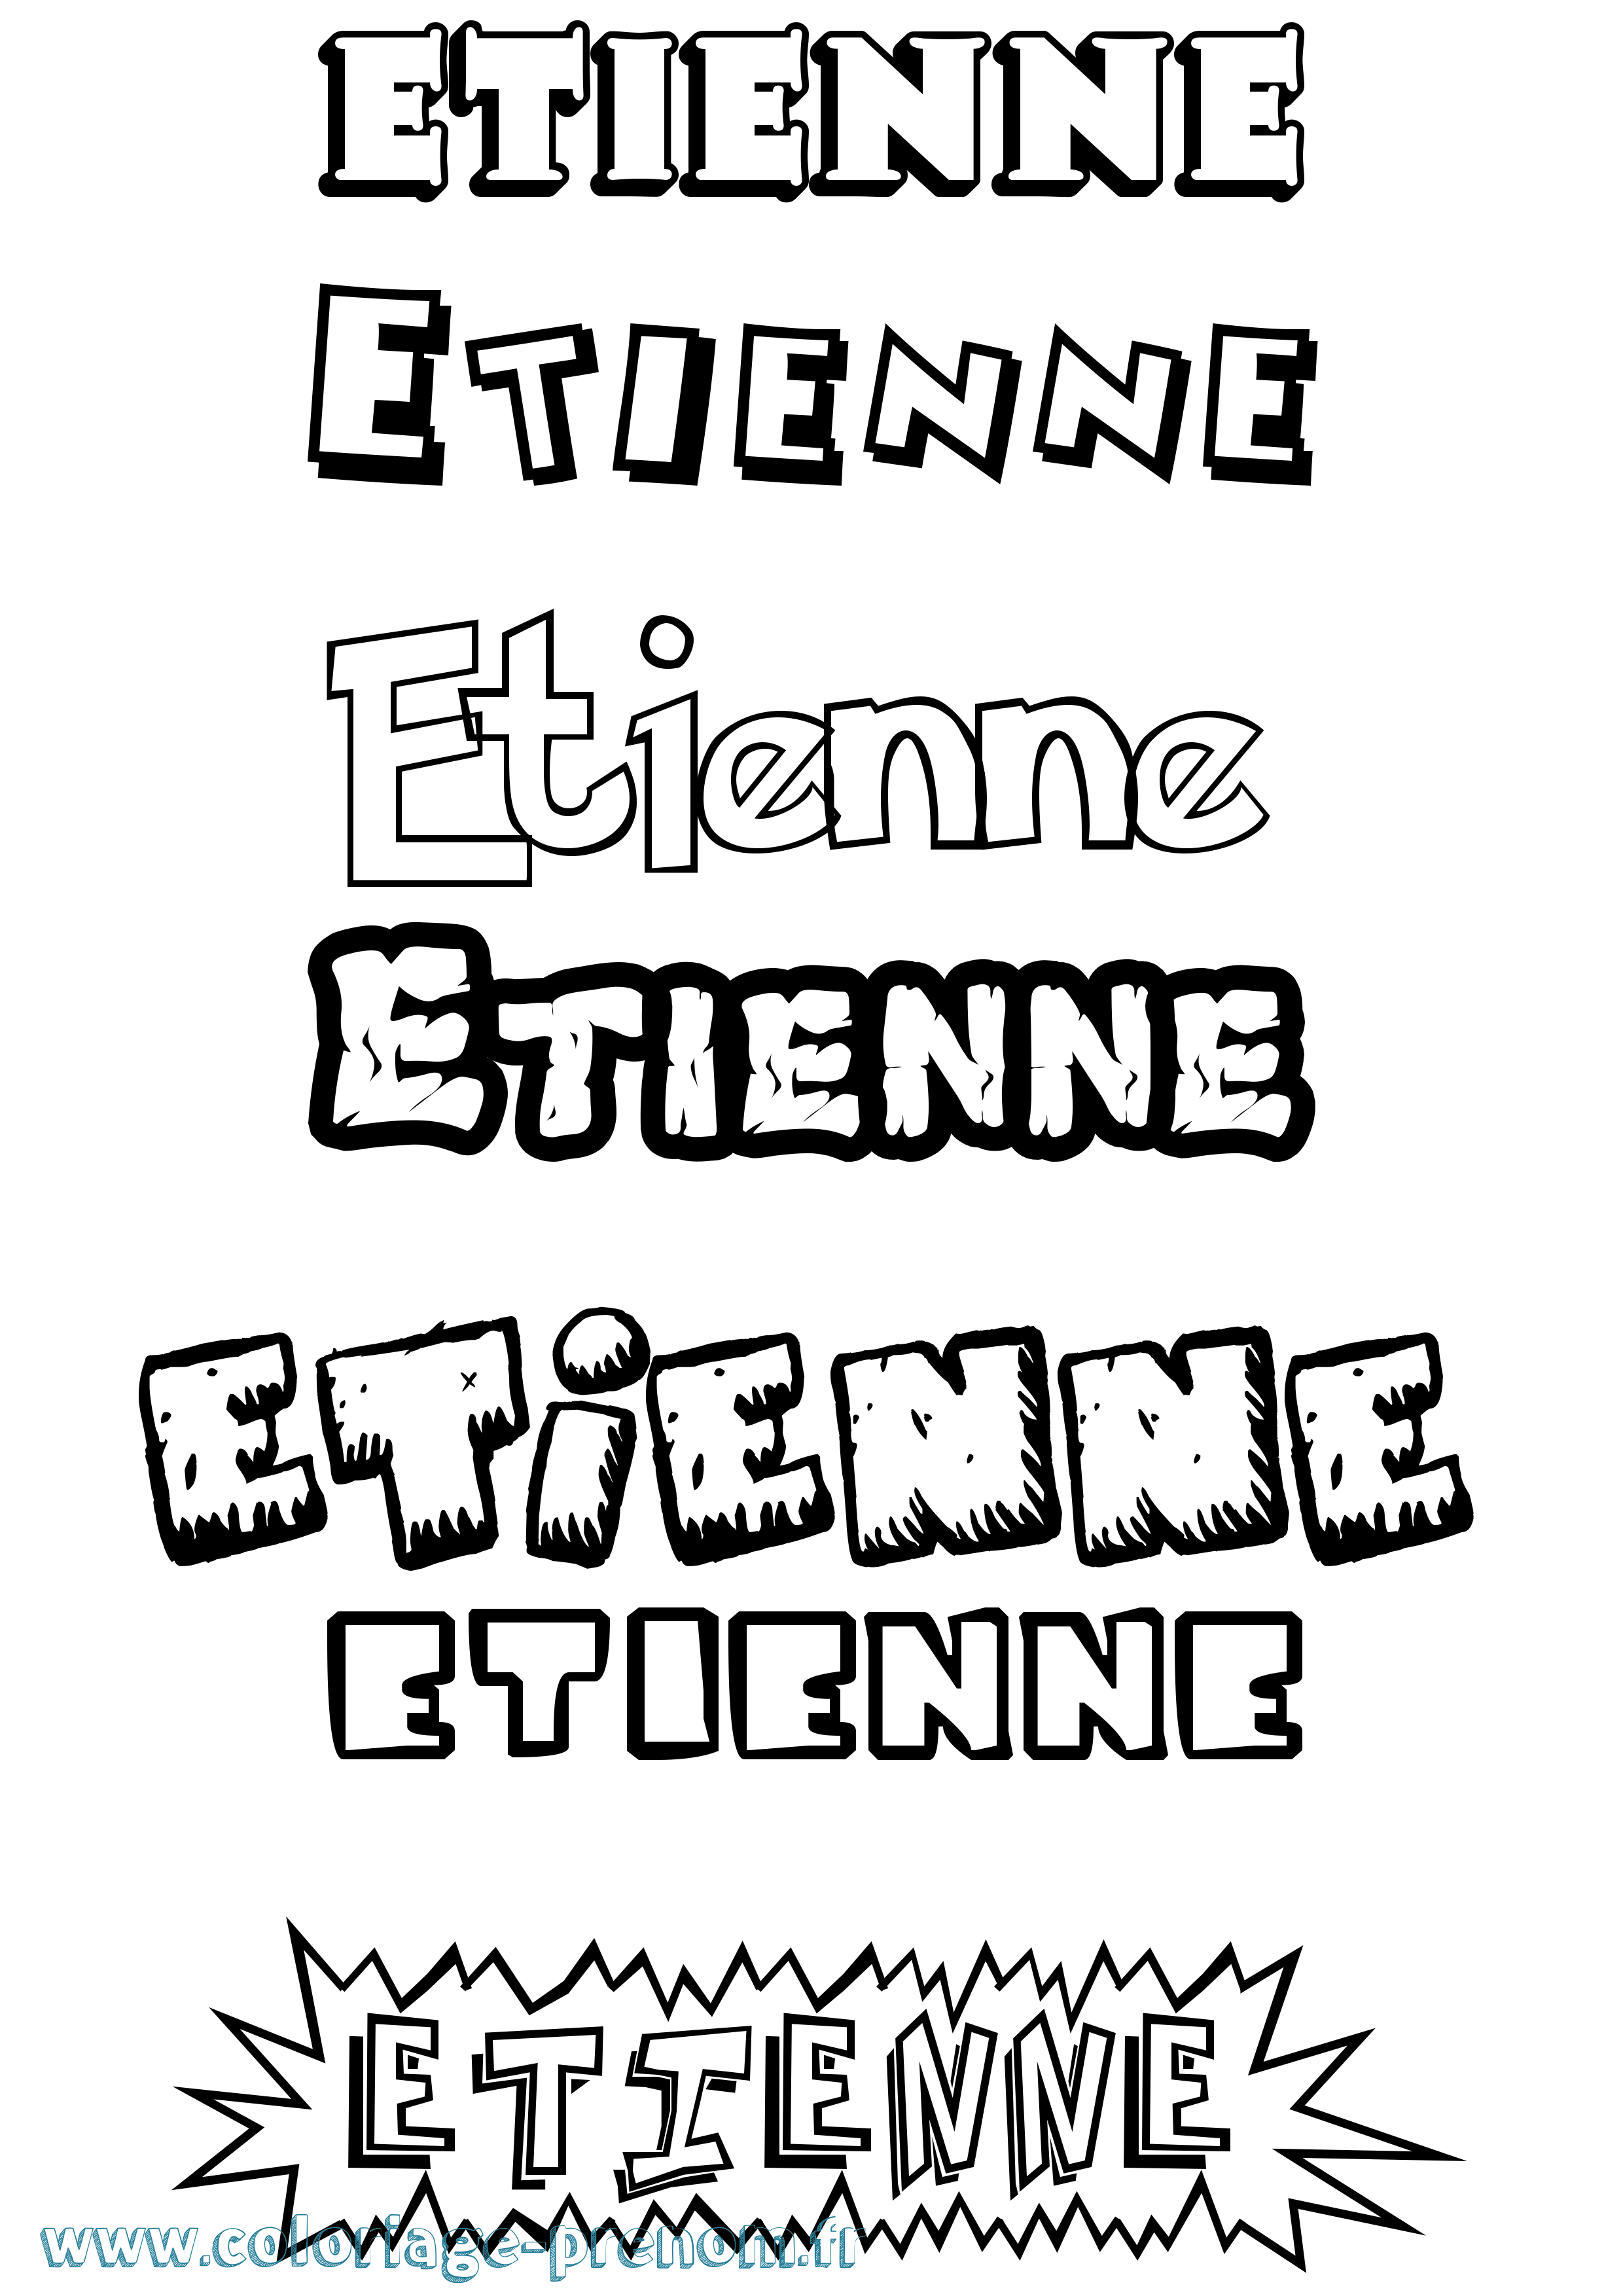 Coloriage prénom Etienne